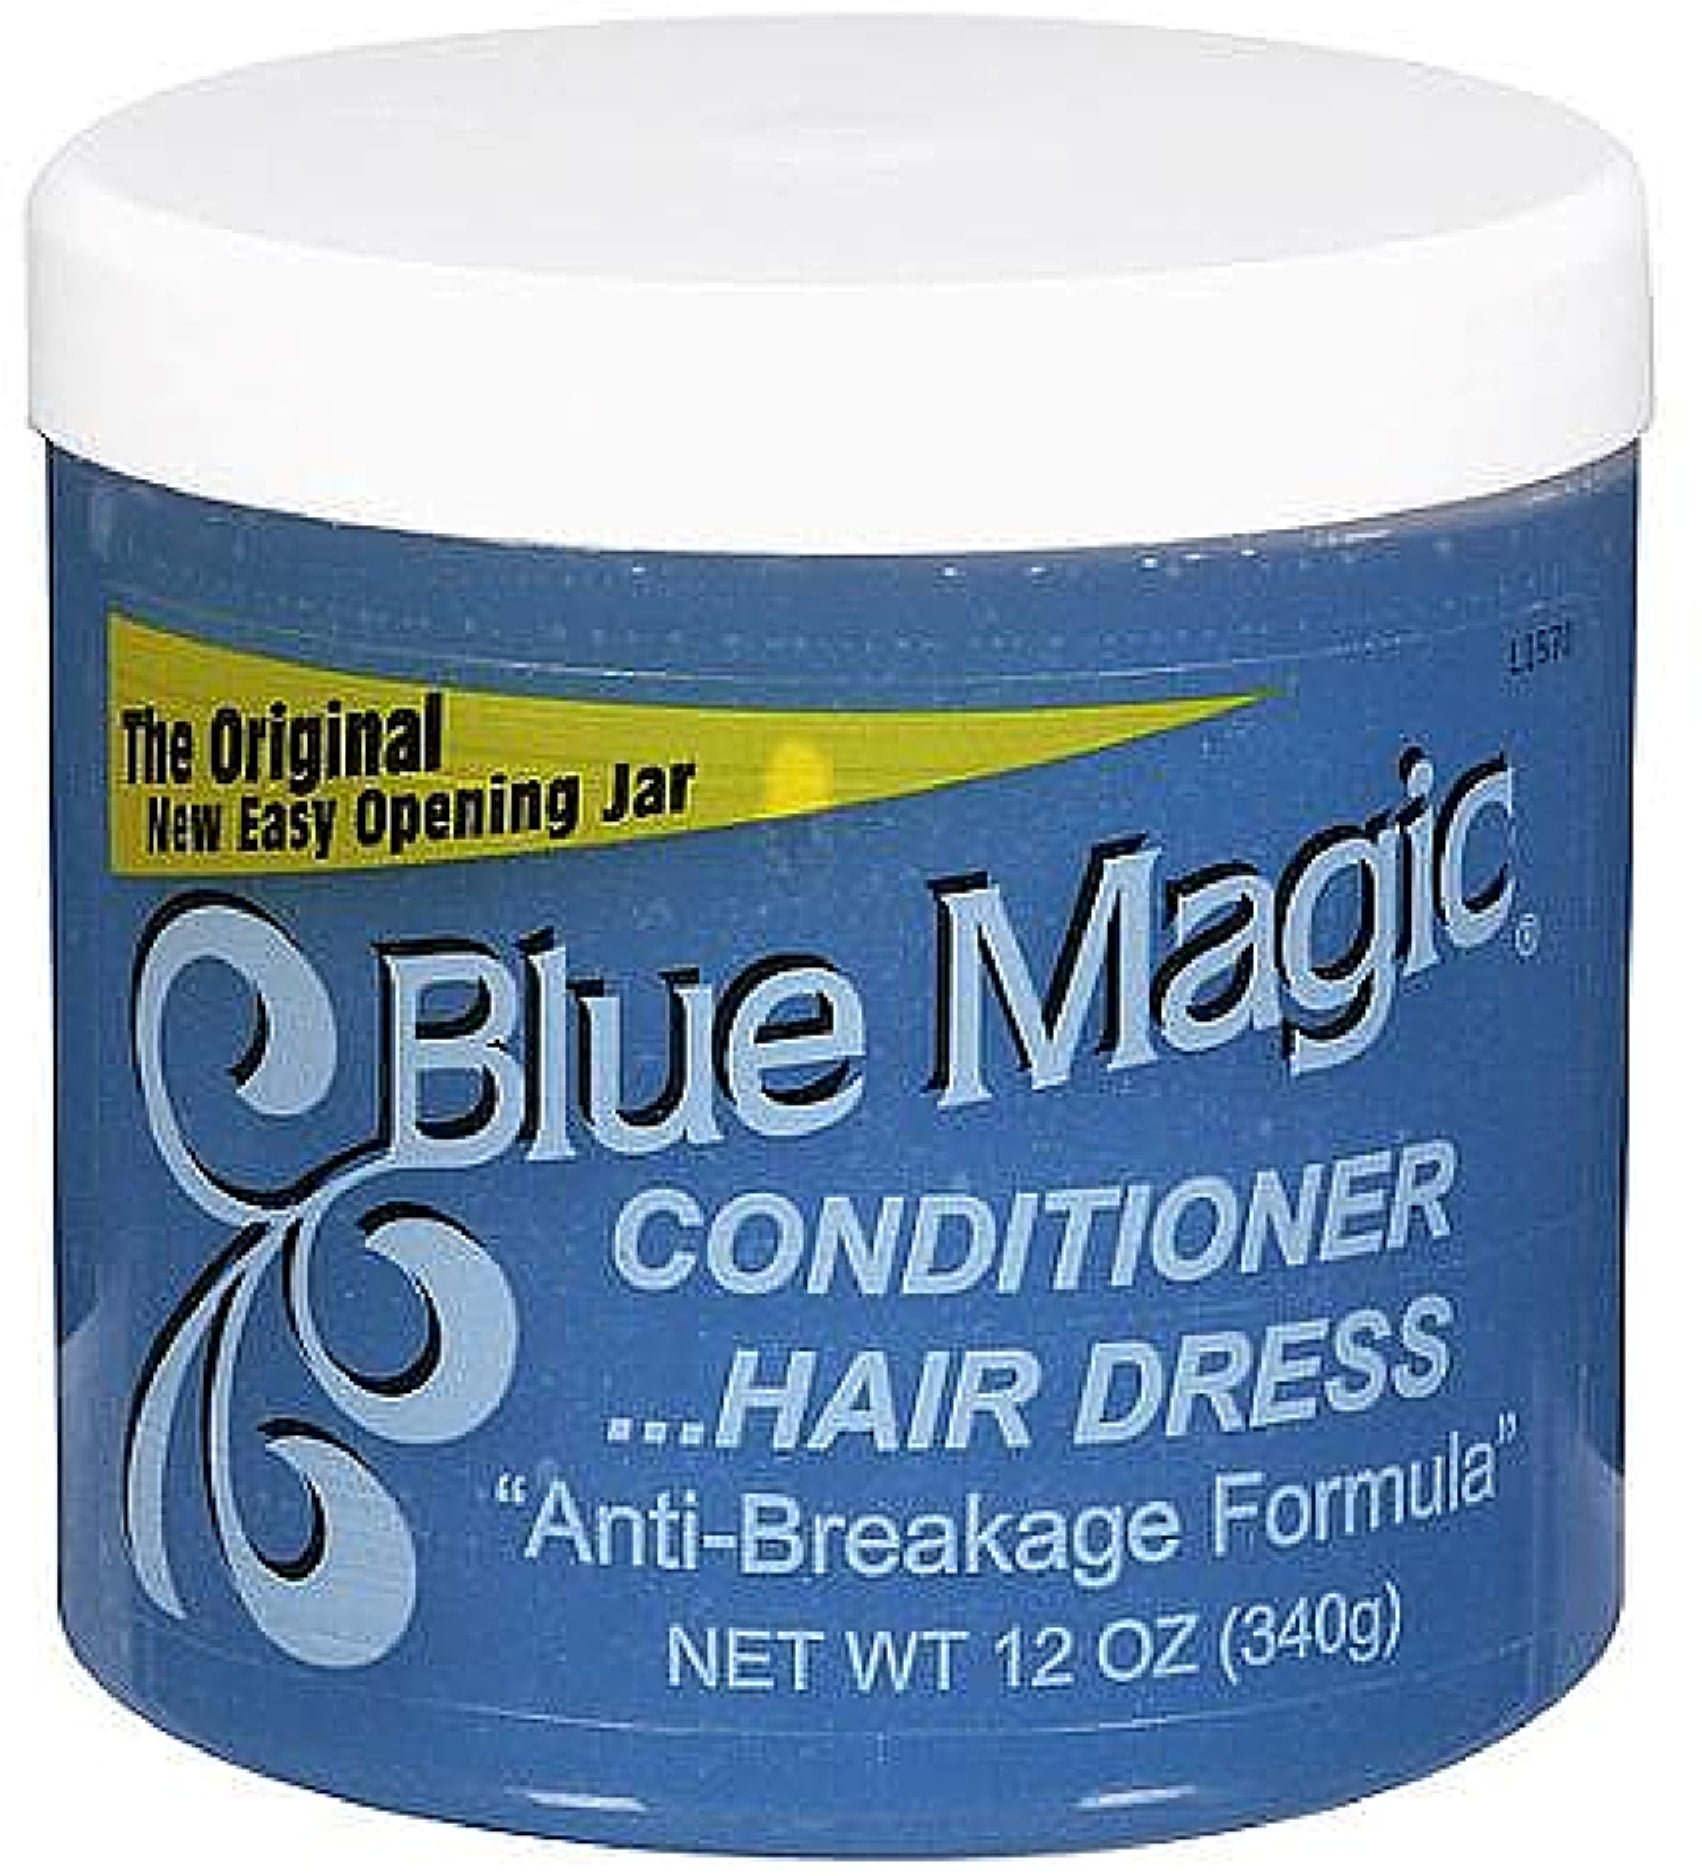 blue magic conditioner hair dress